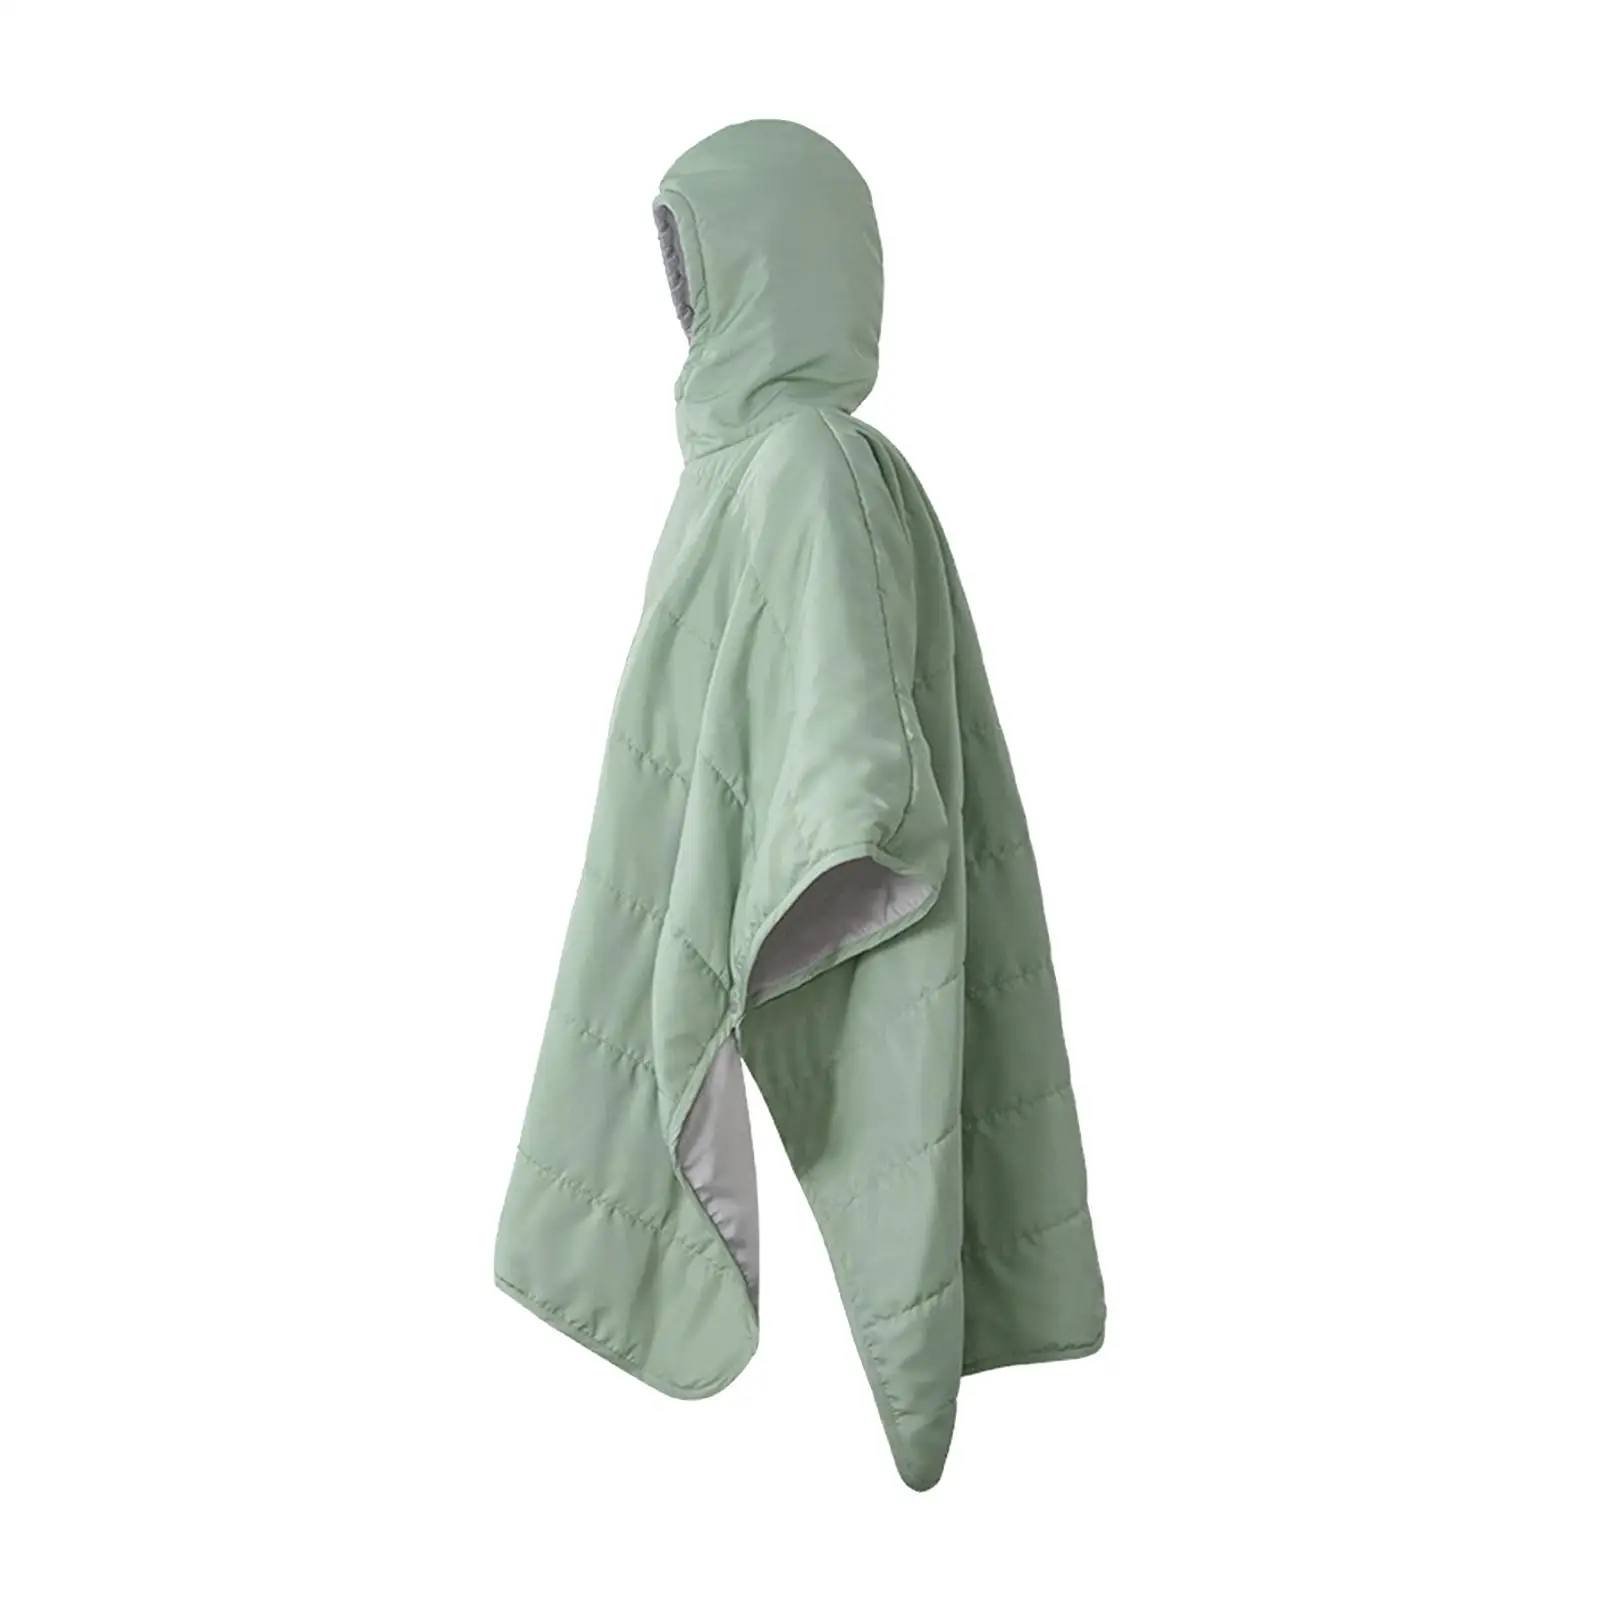 Wearable Sleeping Bag Cloak Hooded Blanket Hammock Portable for Backpacking